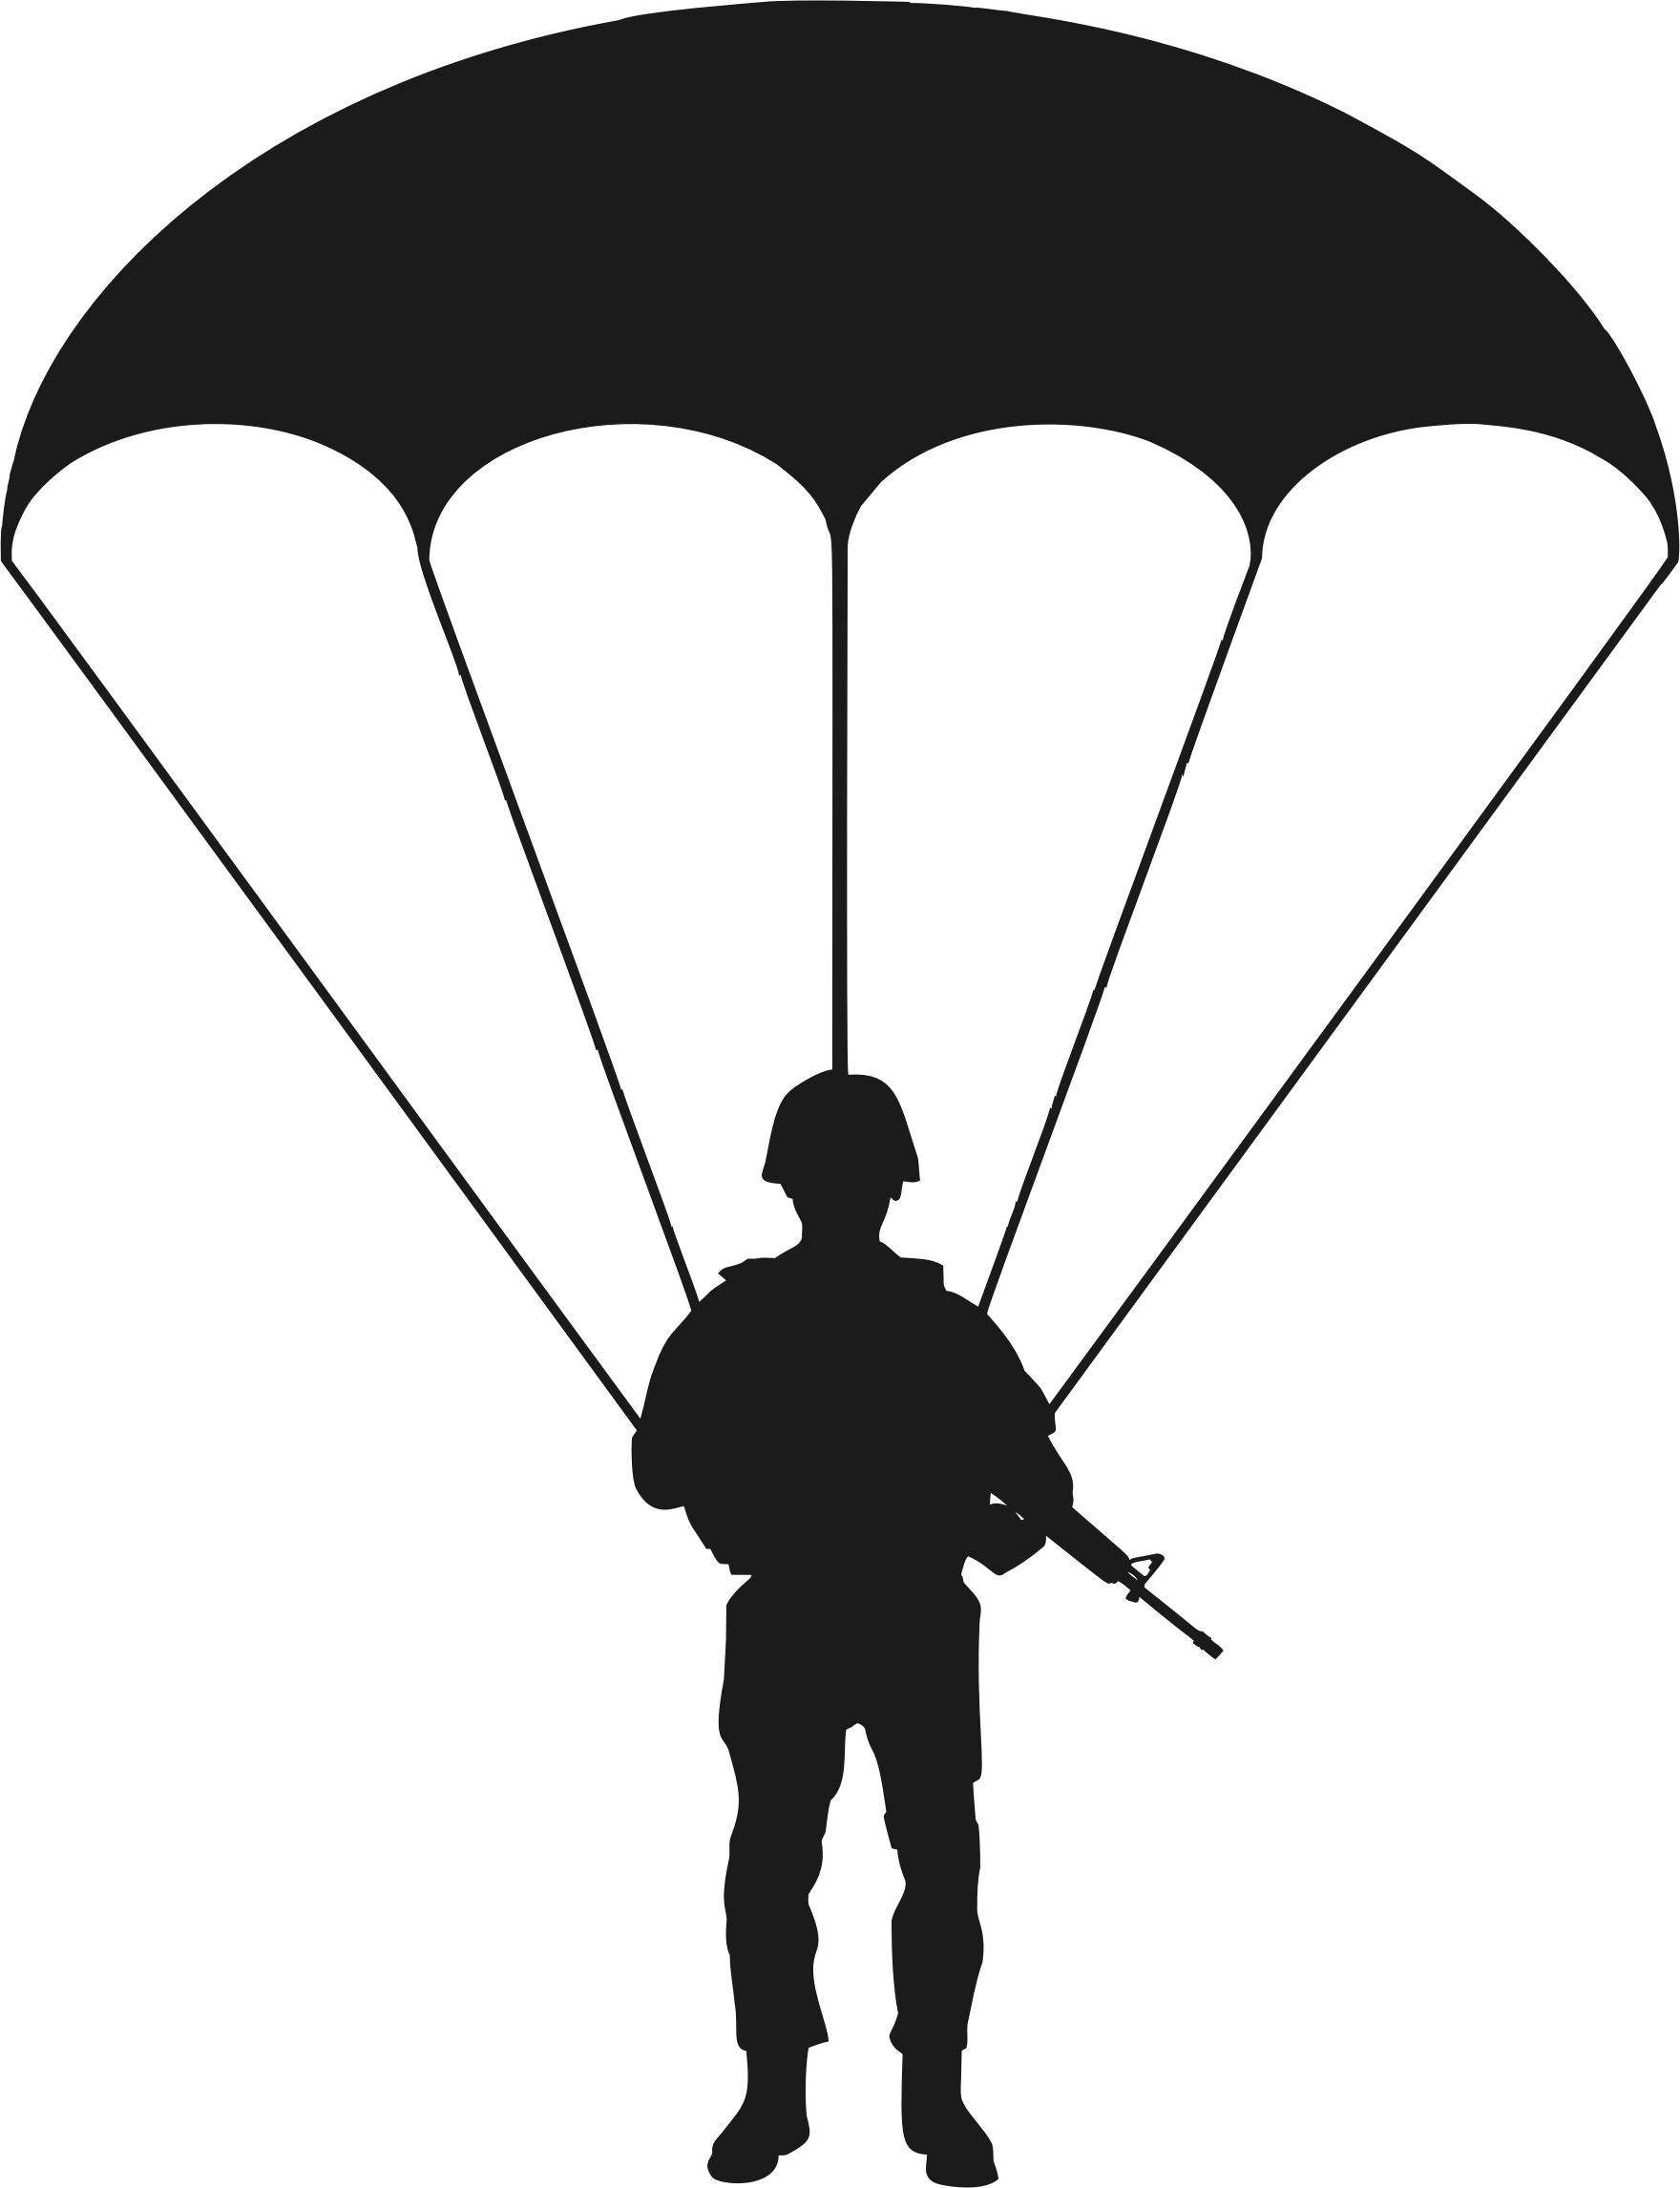 Paratrooper Silhouette Clip arts